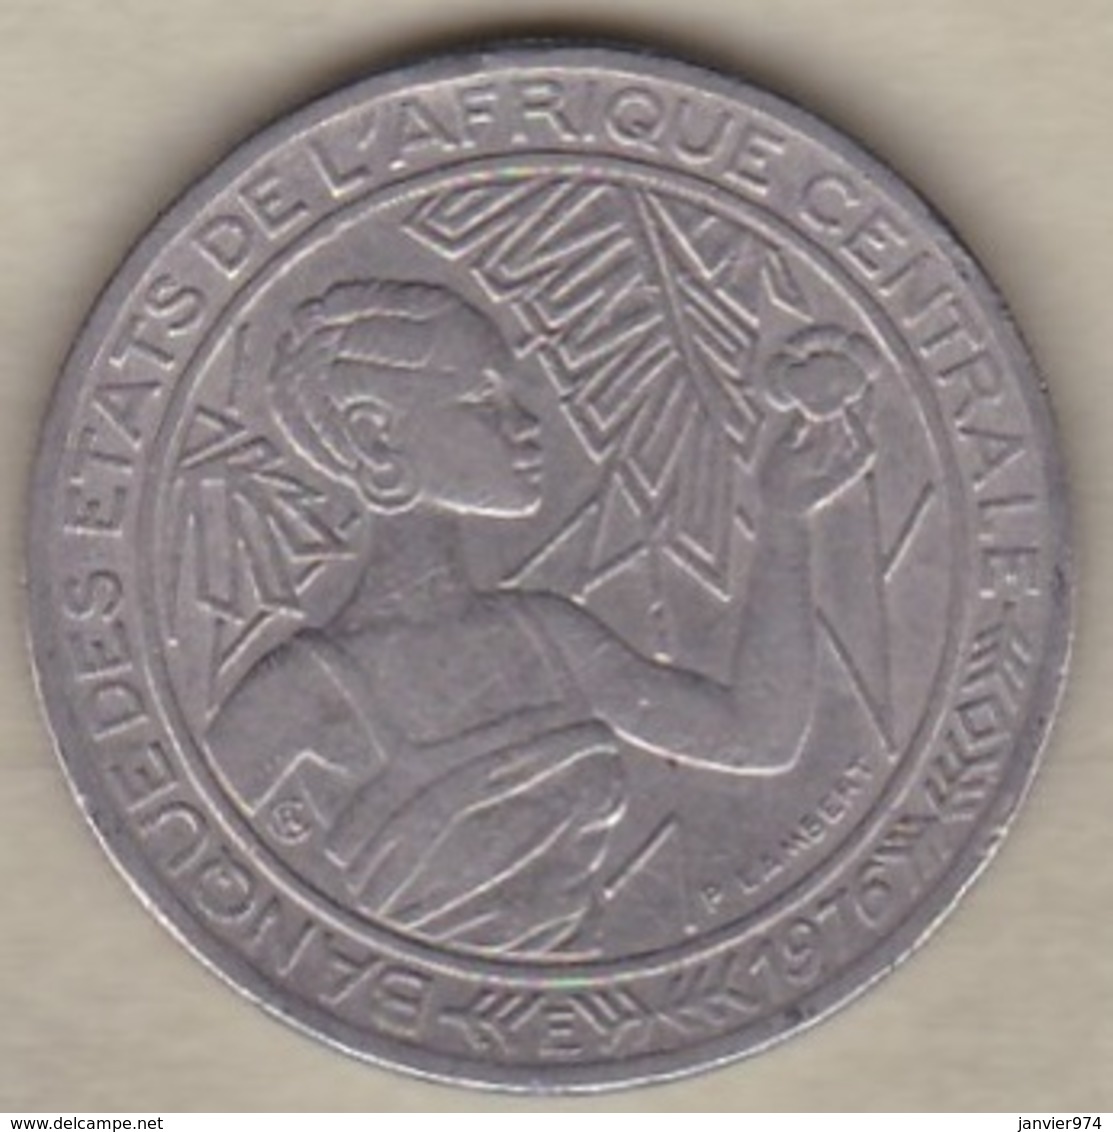 Banque Des Etats De L'Afrique Centrale. 500 Francs 1976 E Cameroun, En Nickel, KM# 12 - Kameroen